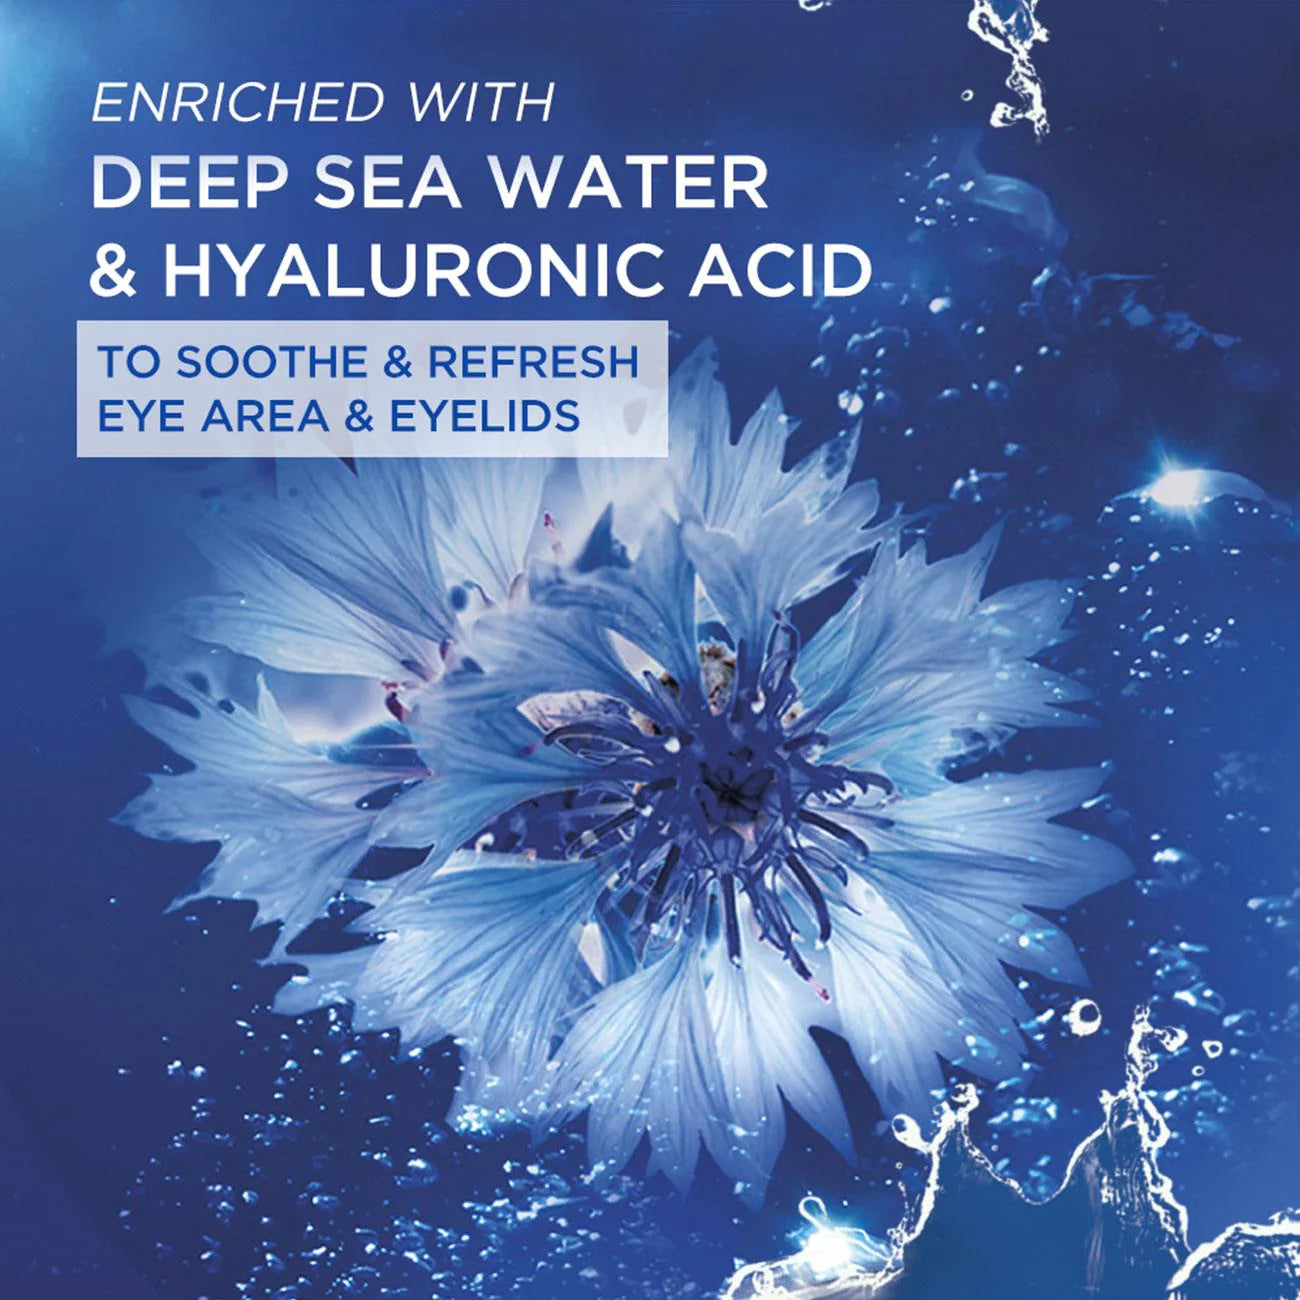 Garnier Hydra Bomb Hydrating Night Eye Mask with Hyaluronic Acid & Deep Sea Water